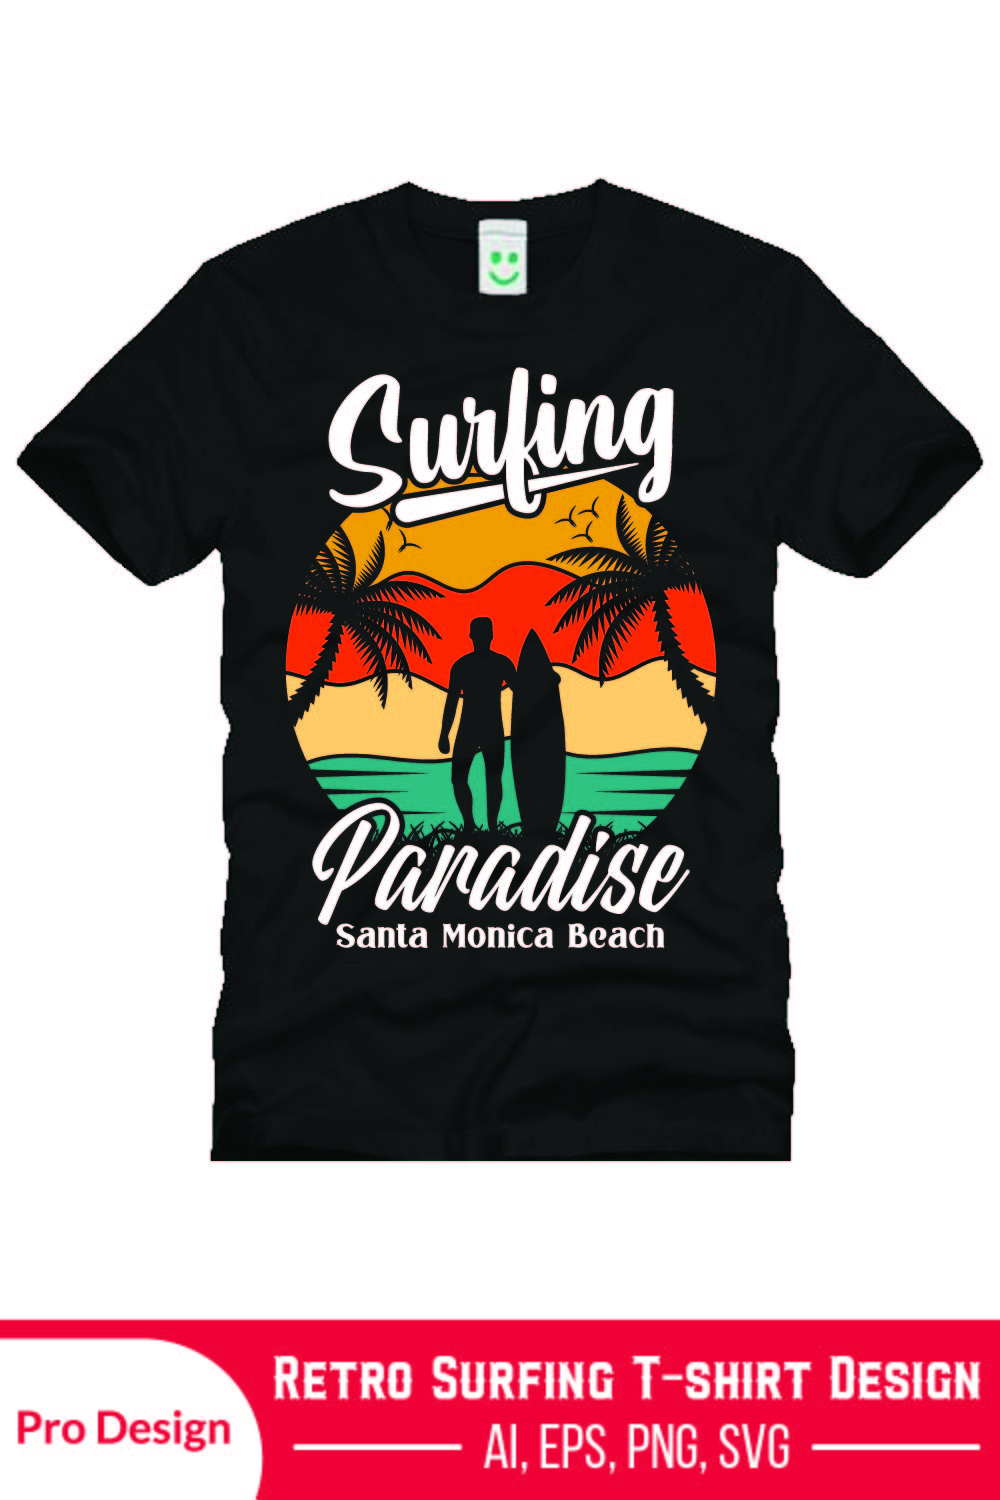 Summer T-Shirts Design| Surfing T-Shirts Design| Retro Vantage T-Shirts Design| pinterest preview image.